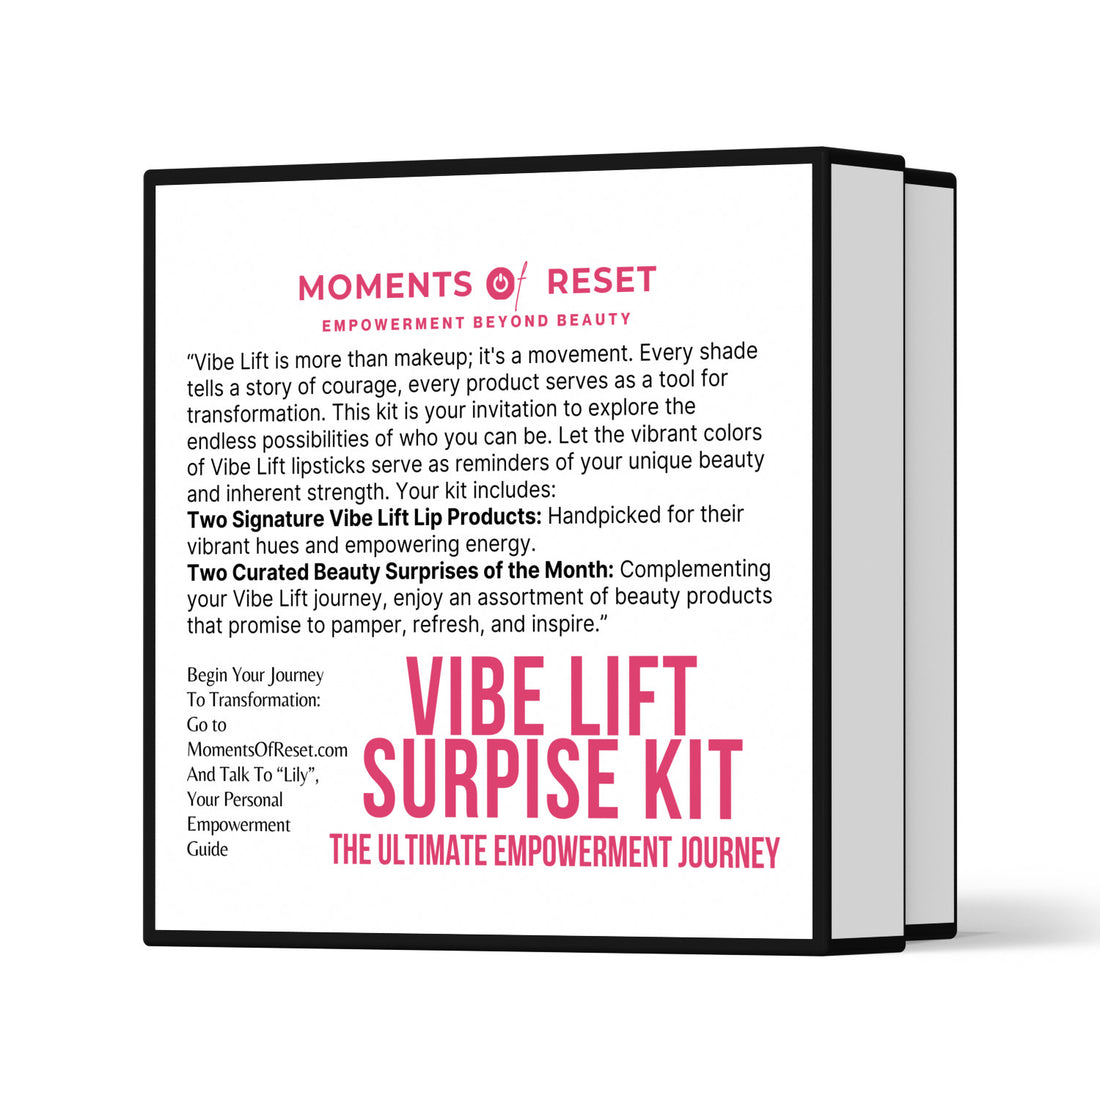 Vibe Lift Surprise Kit: The Ultimate Empowerment Journey